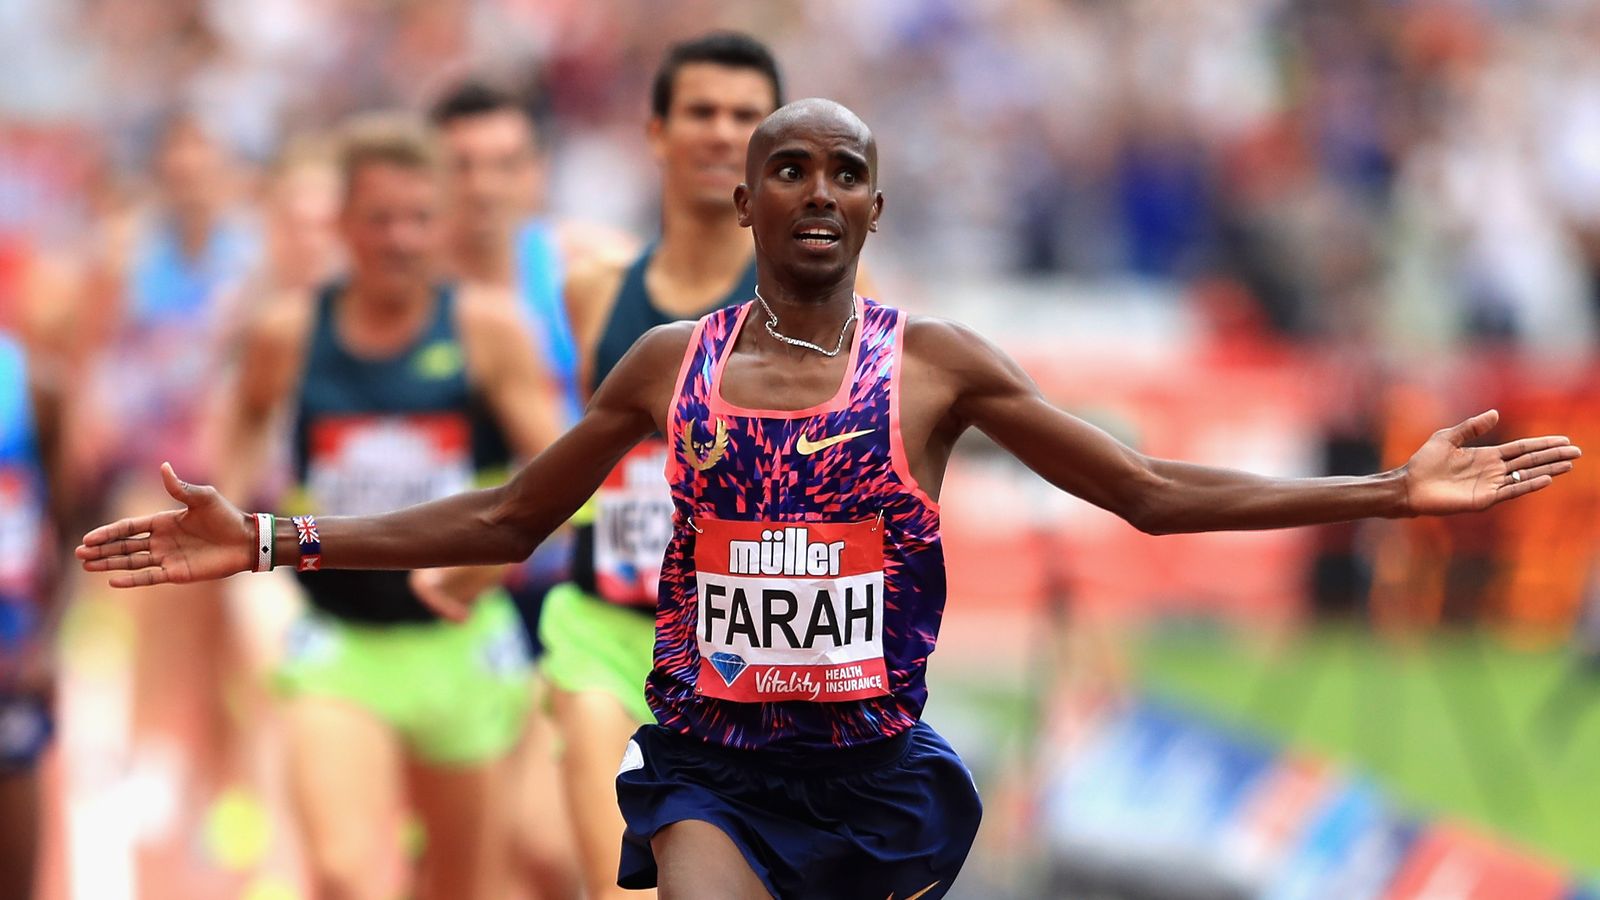 Sir Mo Farah to run final track race in Birmingham | Athletics News ...